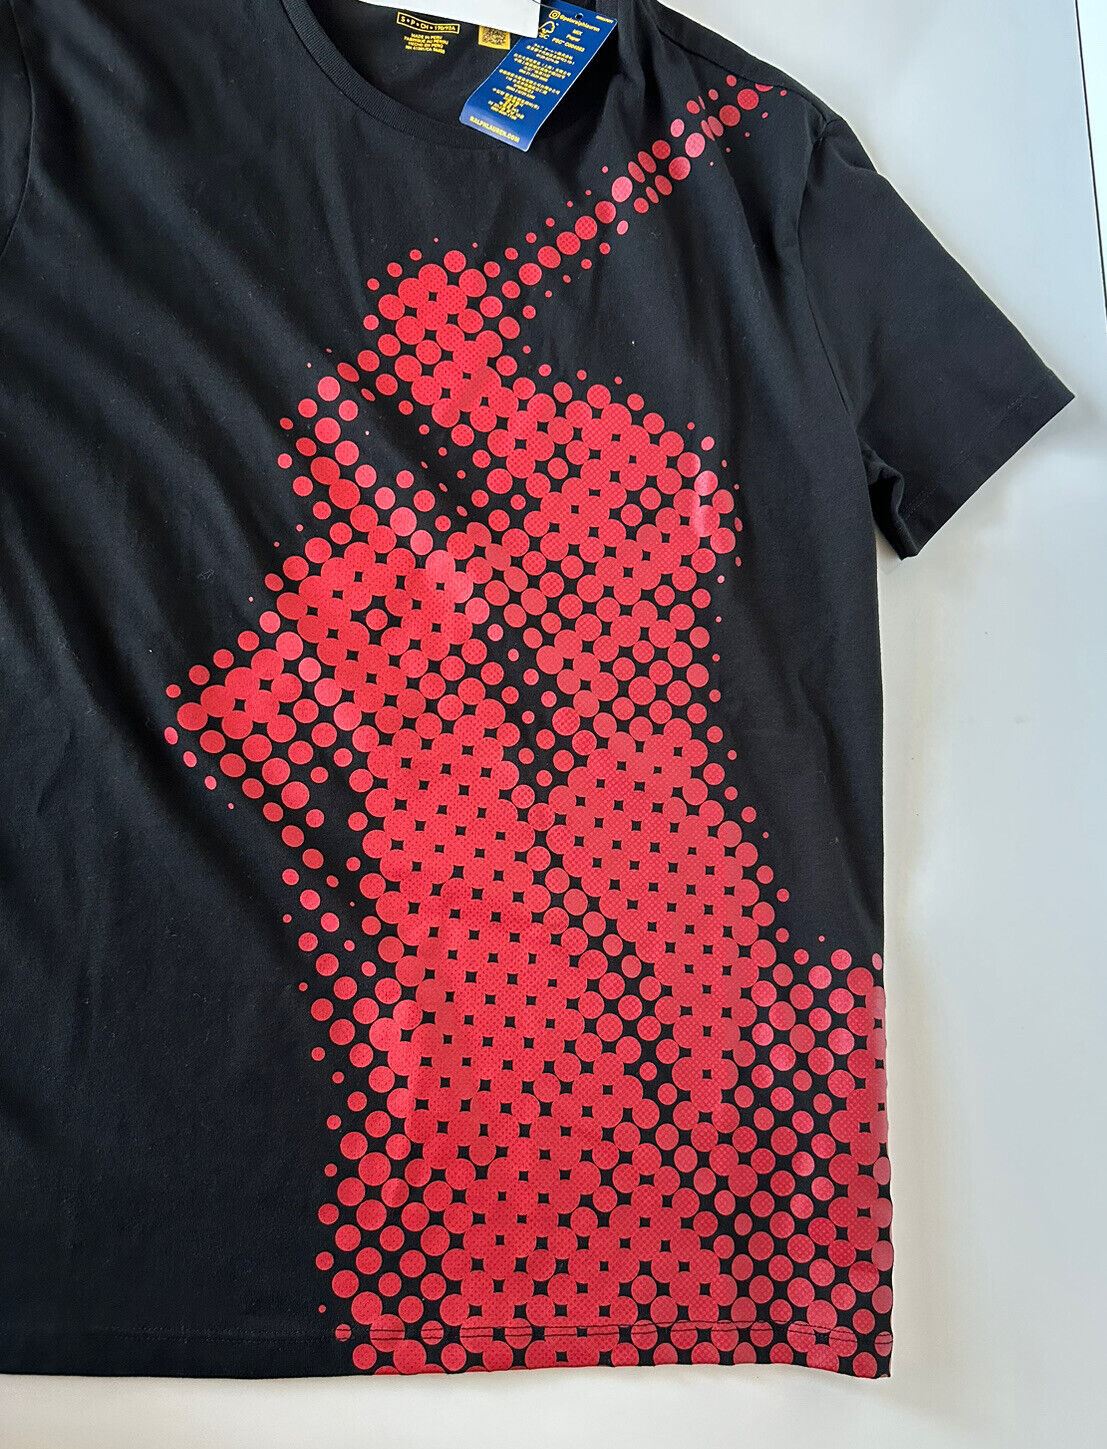 Neu mit Etikett: 65 $ Polo Ralph Lauren Kurzarm-Logo-T-Shirt Schwarz S 